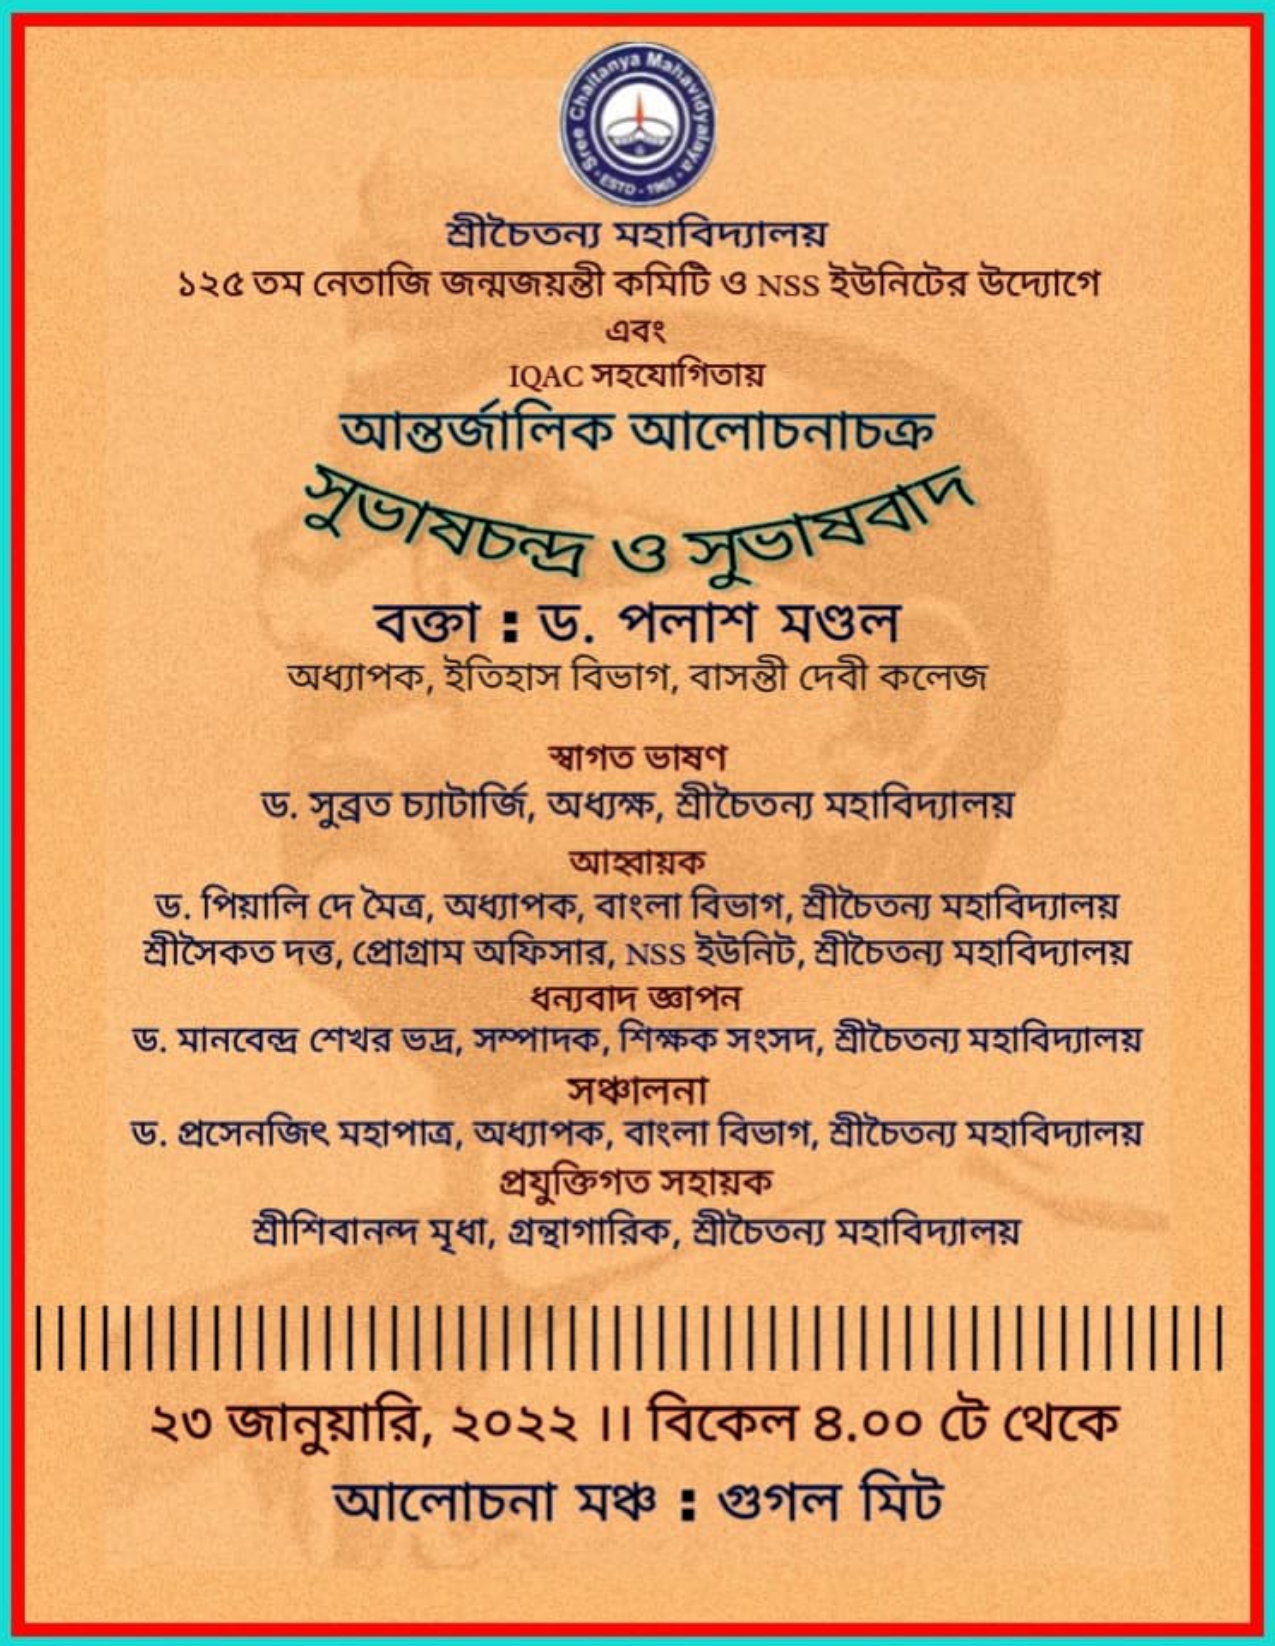 Webinar on Netaji Subhash Chandra Bose-125 Birthday on 23/01/2022